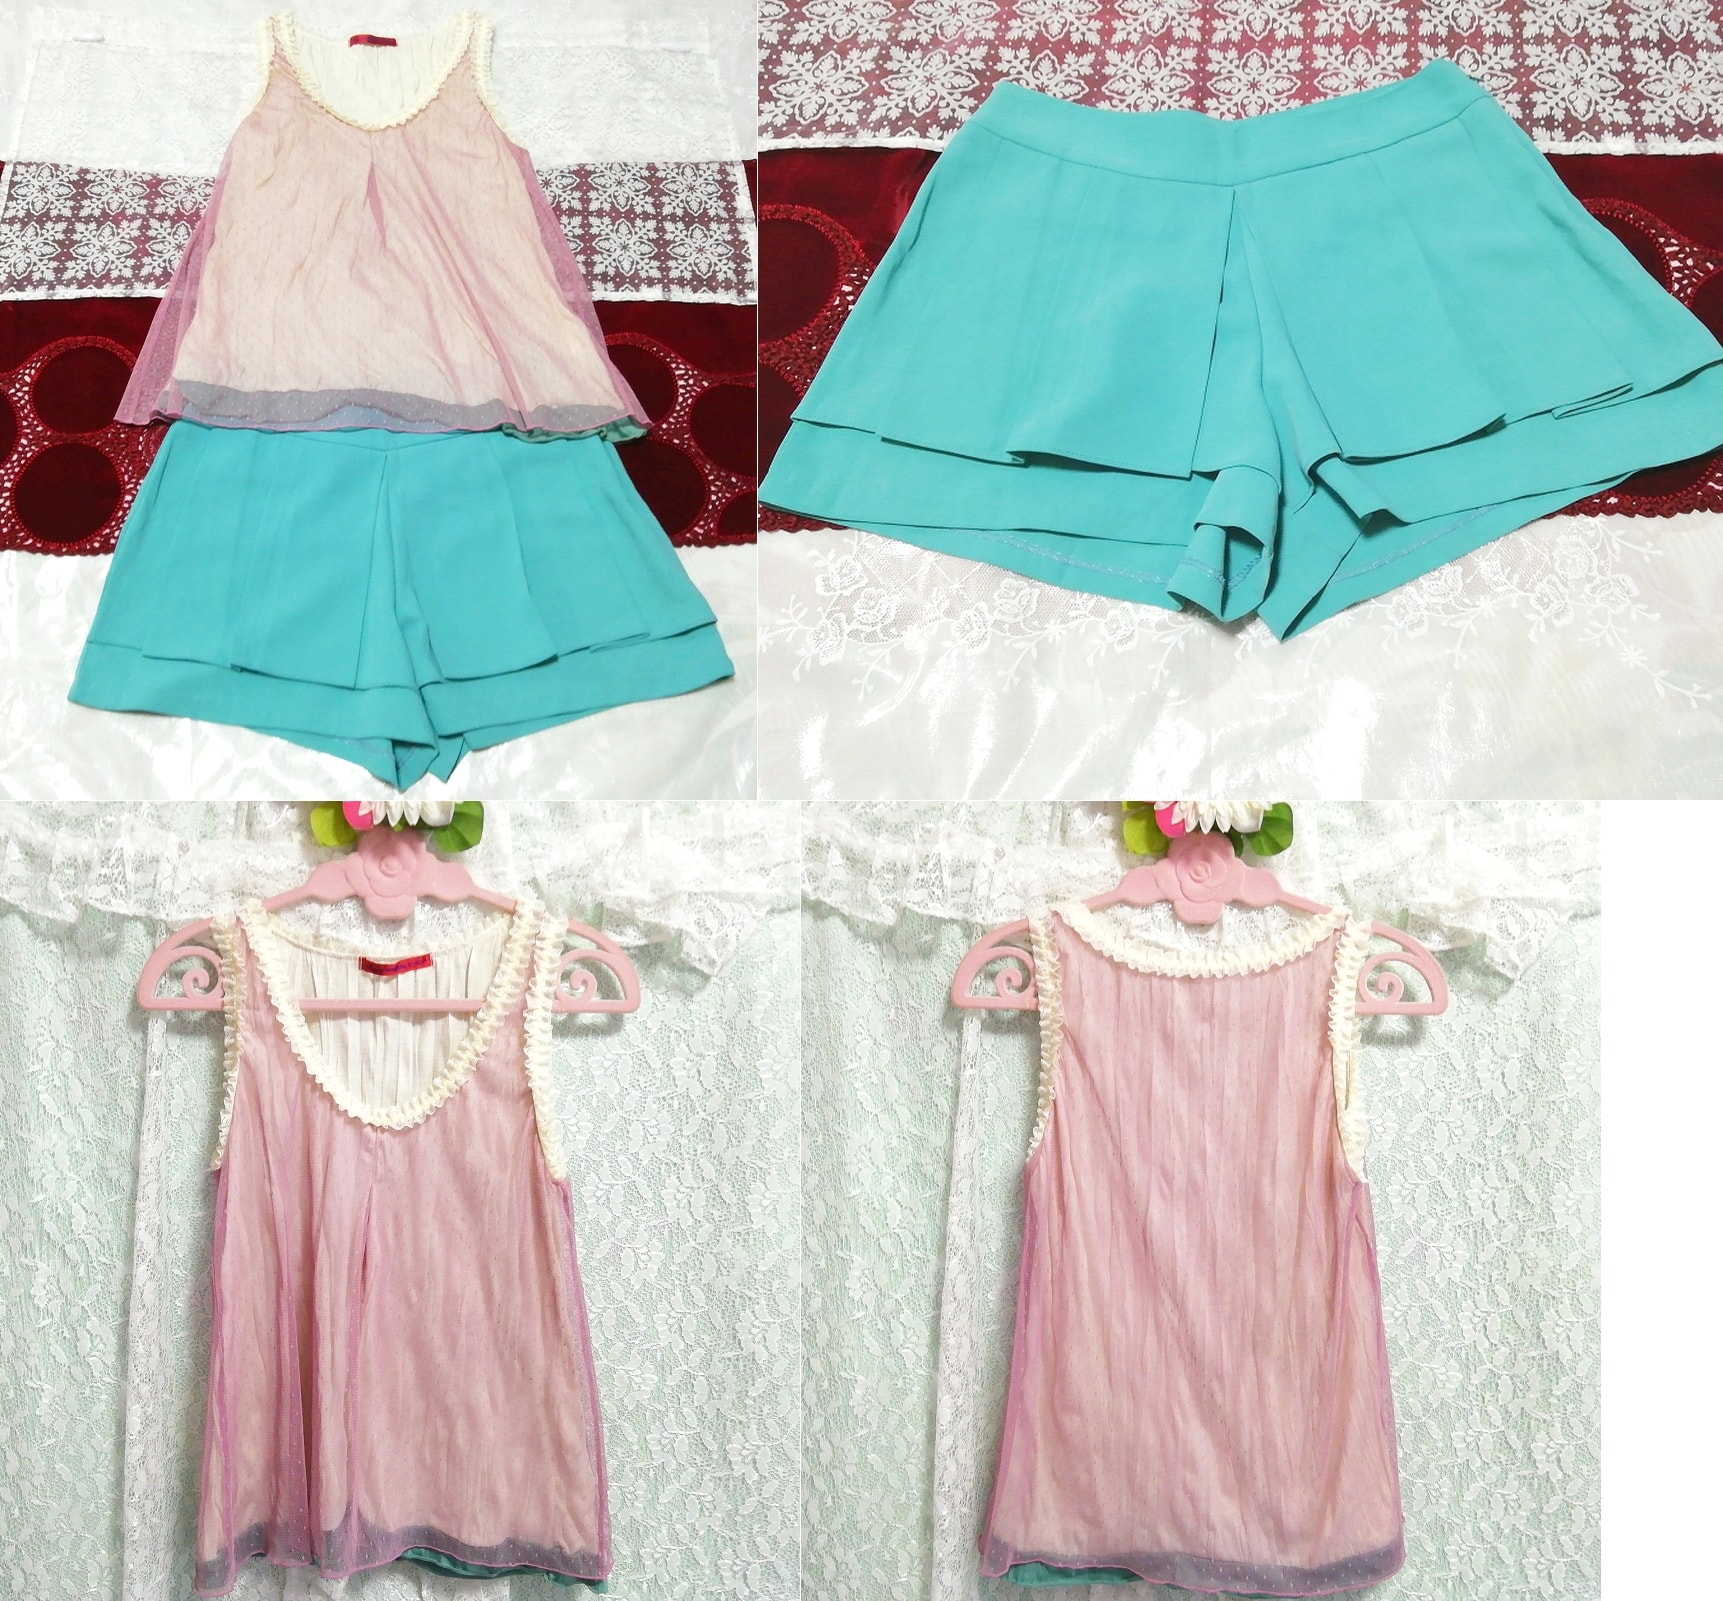 Camisón negligee túnica con volantes sin mangas rosa pantalones cortos verdes 2P, moda, moda para damas, ropa de dormir, pijama